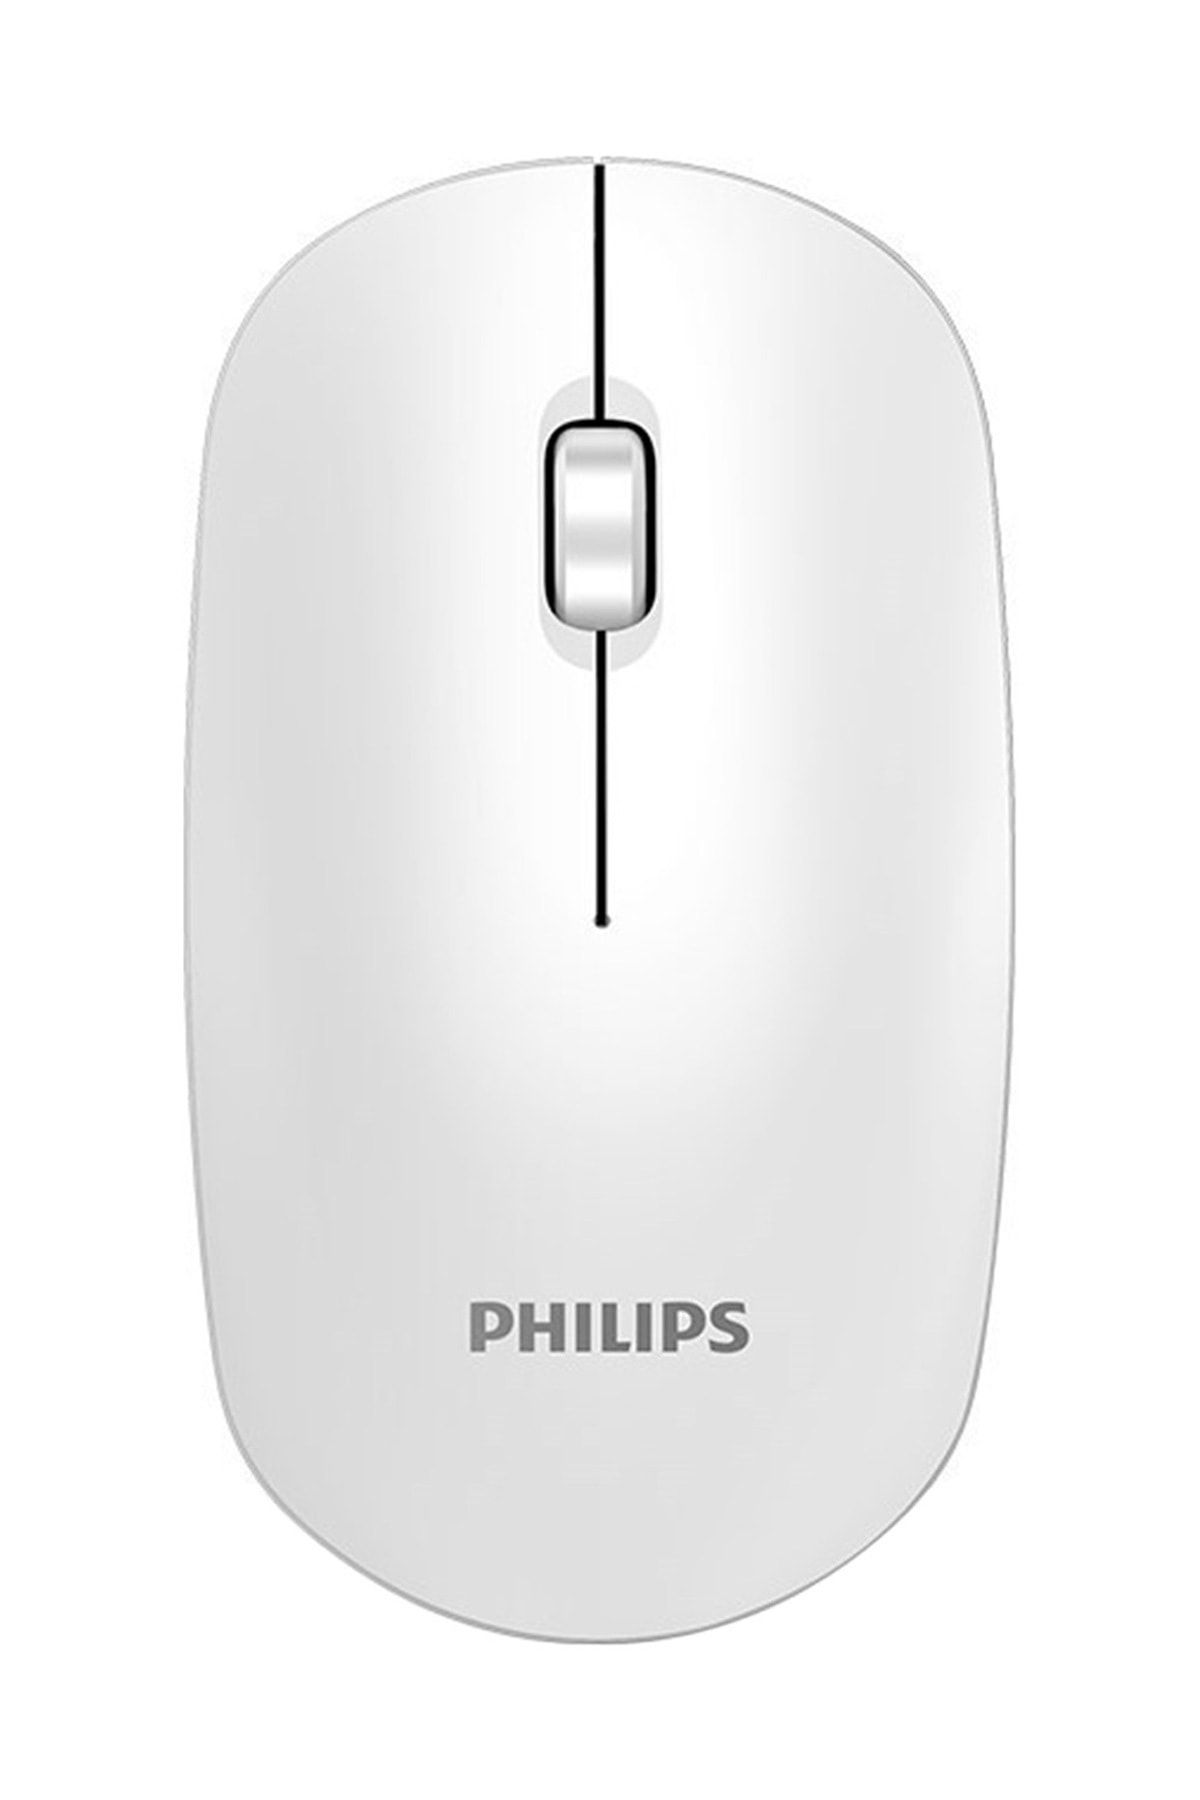 Philips Marka: Spk7315 M315 Kablosuz Mouse 1600 Dpi Beyaz Kategori: Mouse